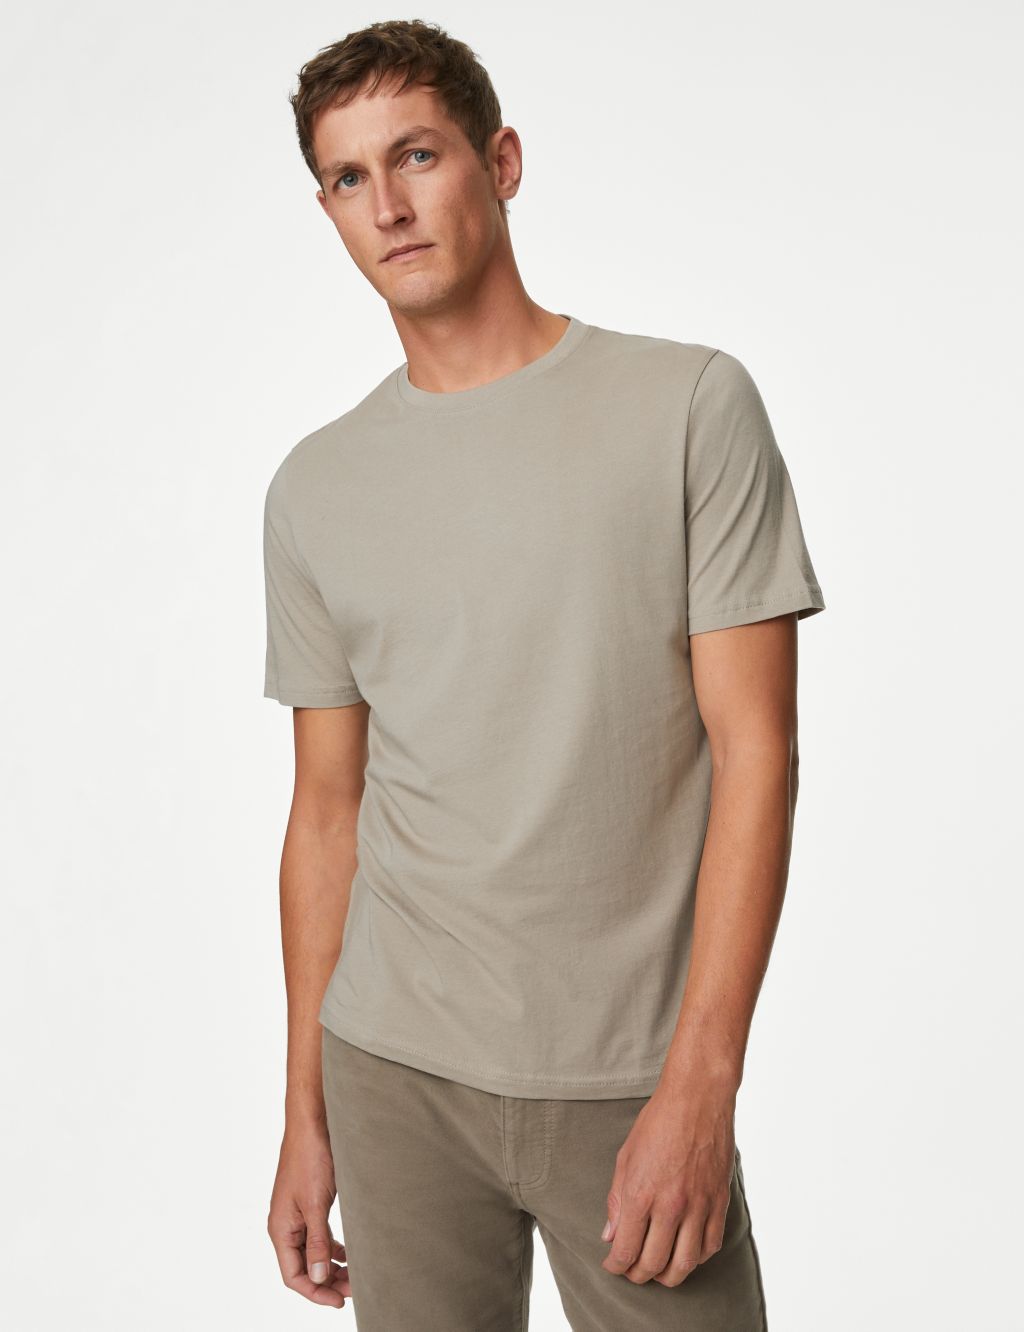 Regular Fit Pure Cotton Crew Neck T-Shirt image 1